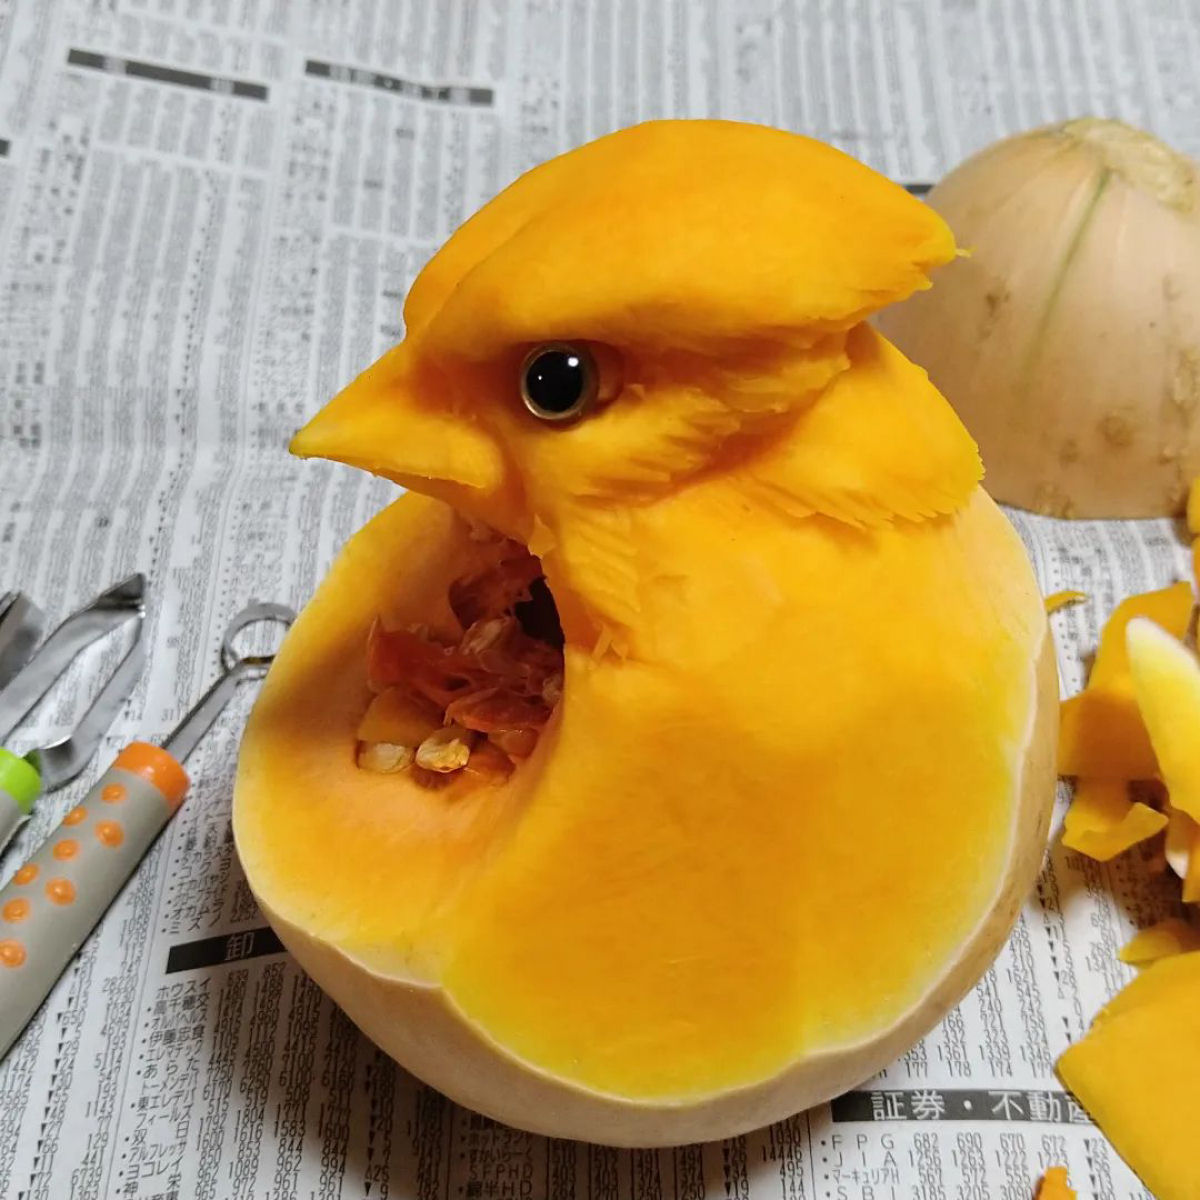 Escultor japons transforma frutas e legumes  em esculturas comestveis brilhantes 03